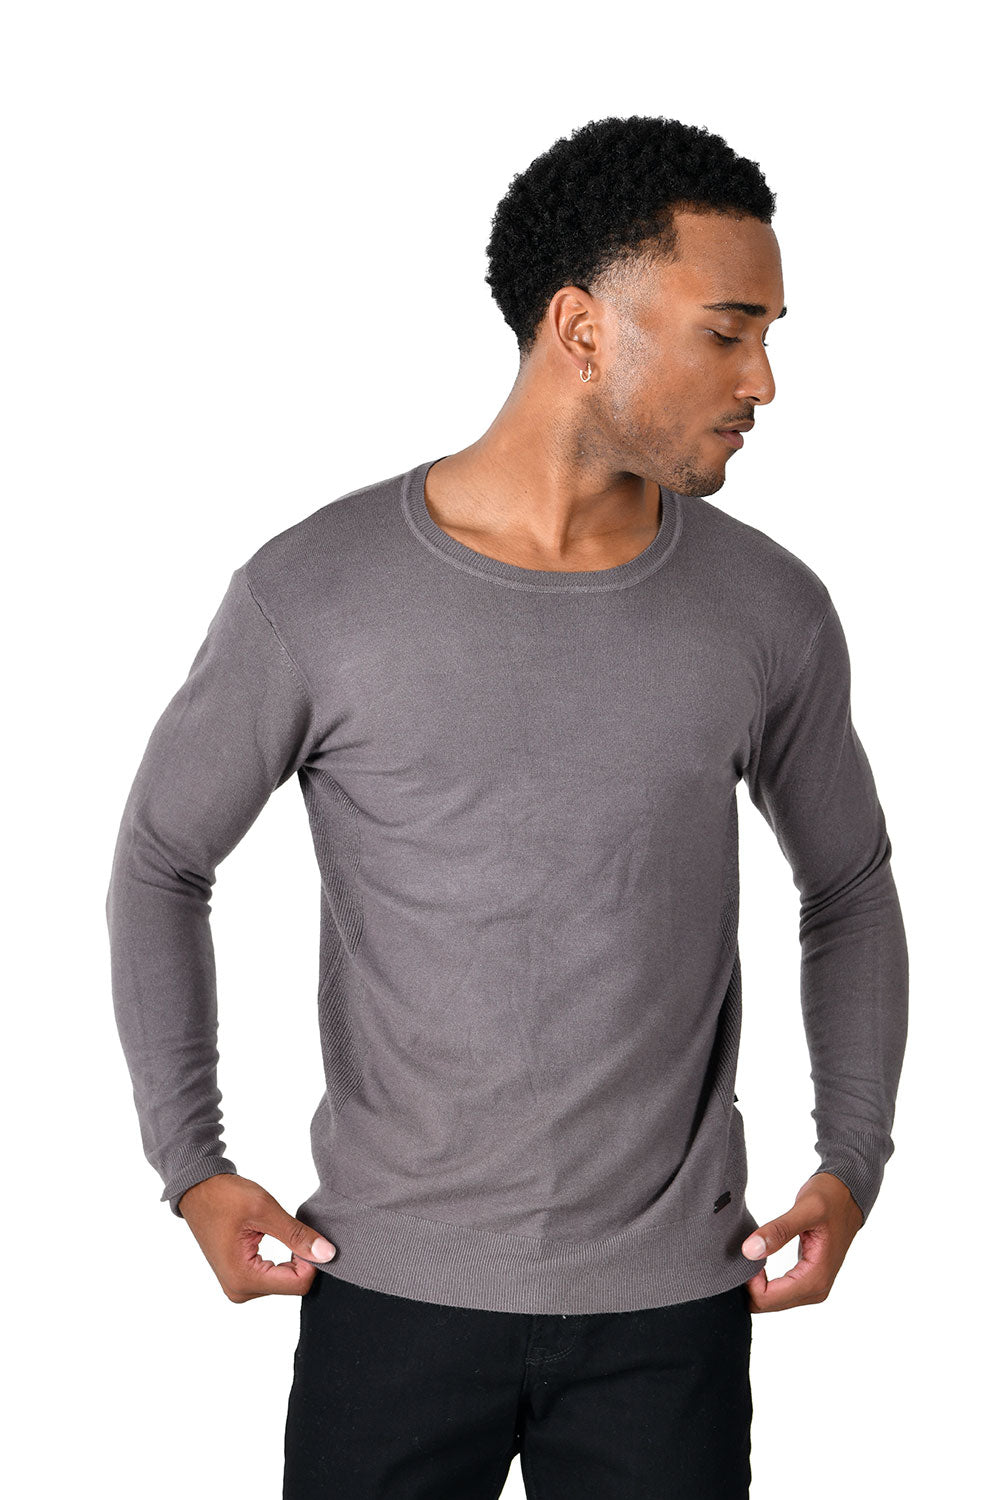 BARABAS Men's Crew Neck Ribbed Solid Color Basic Sweater LS2101 Grey